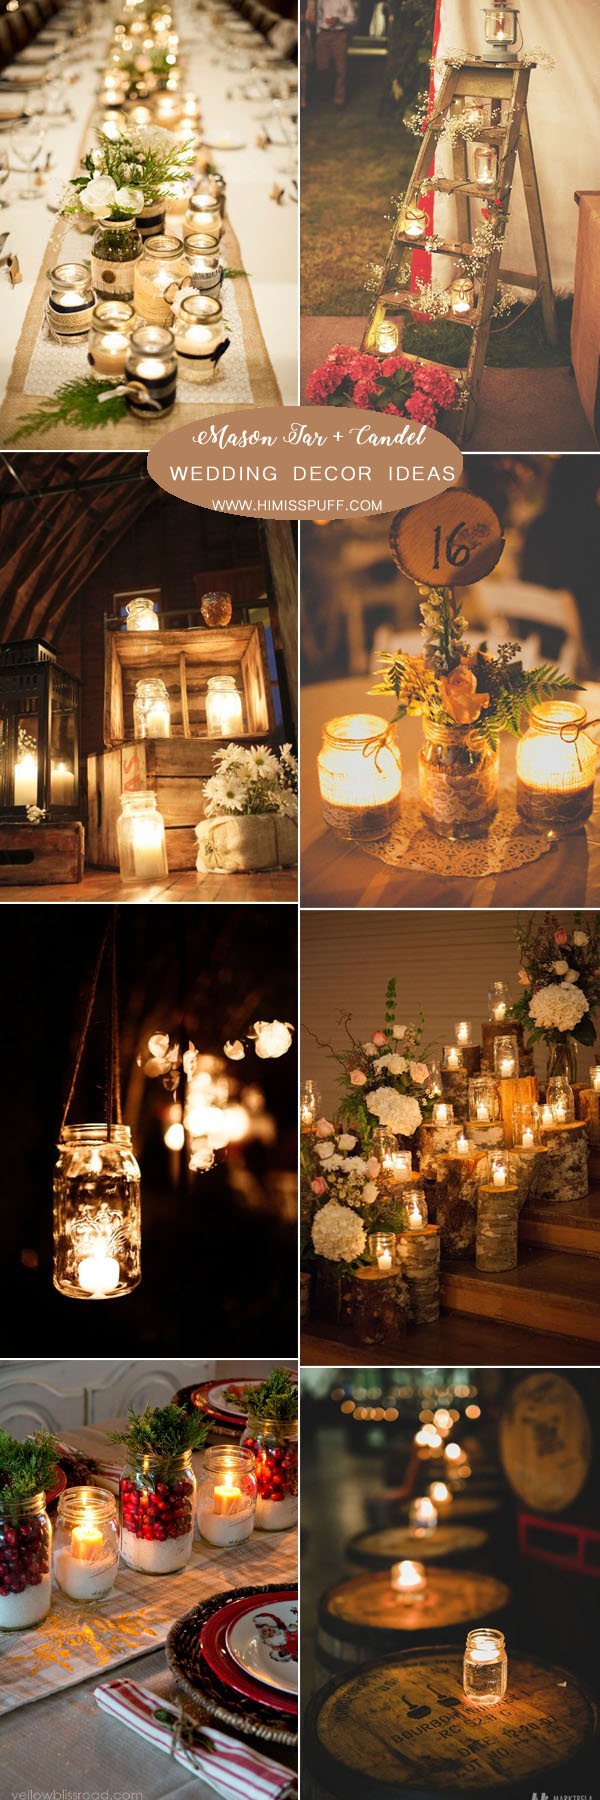 greenery and candle wedding decor ideas